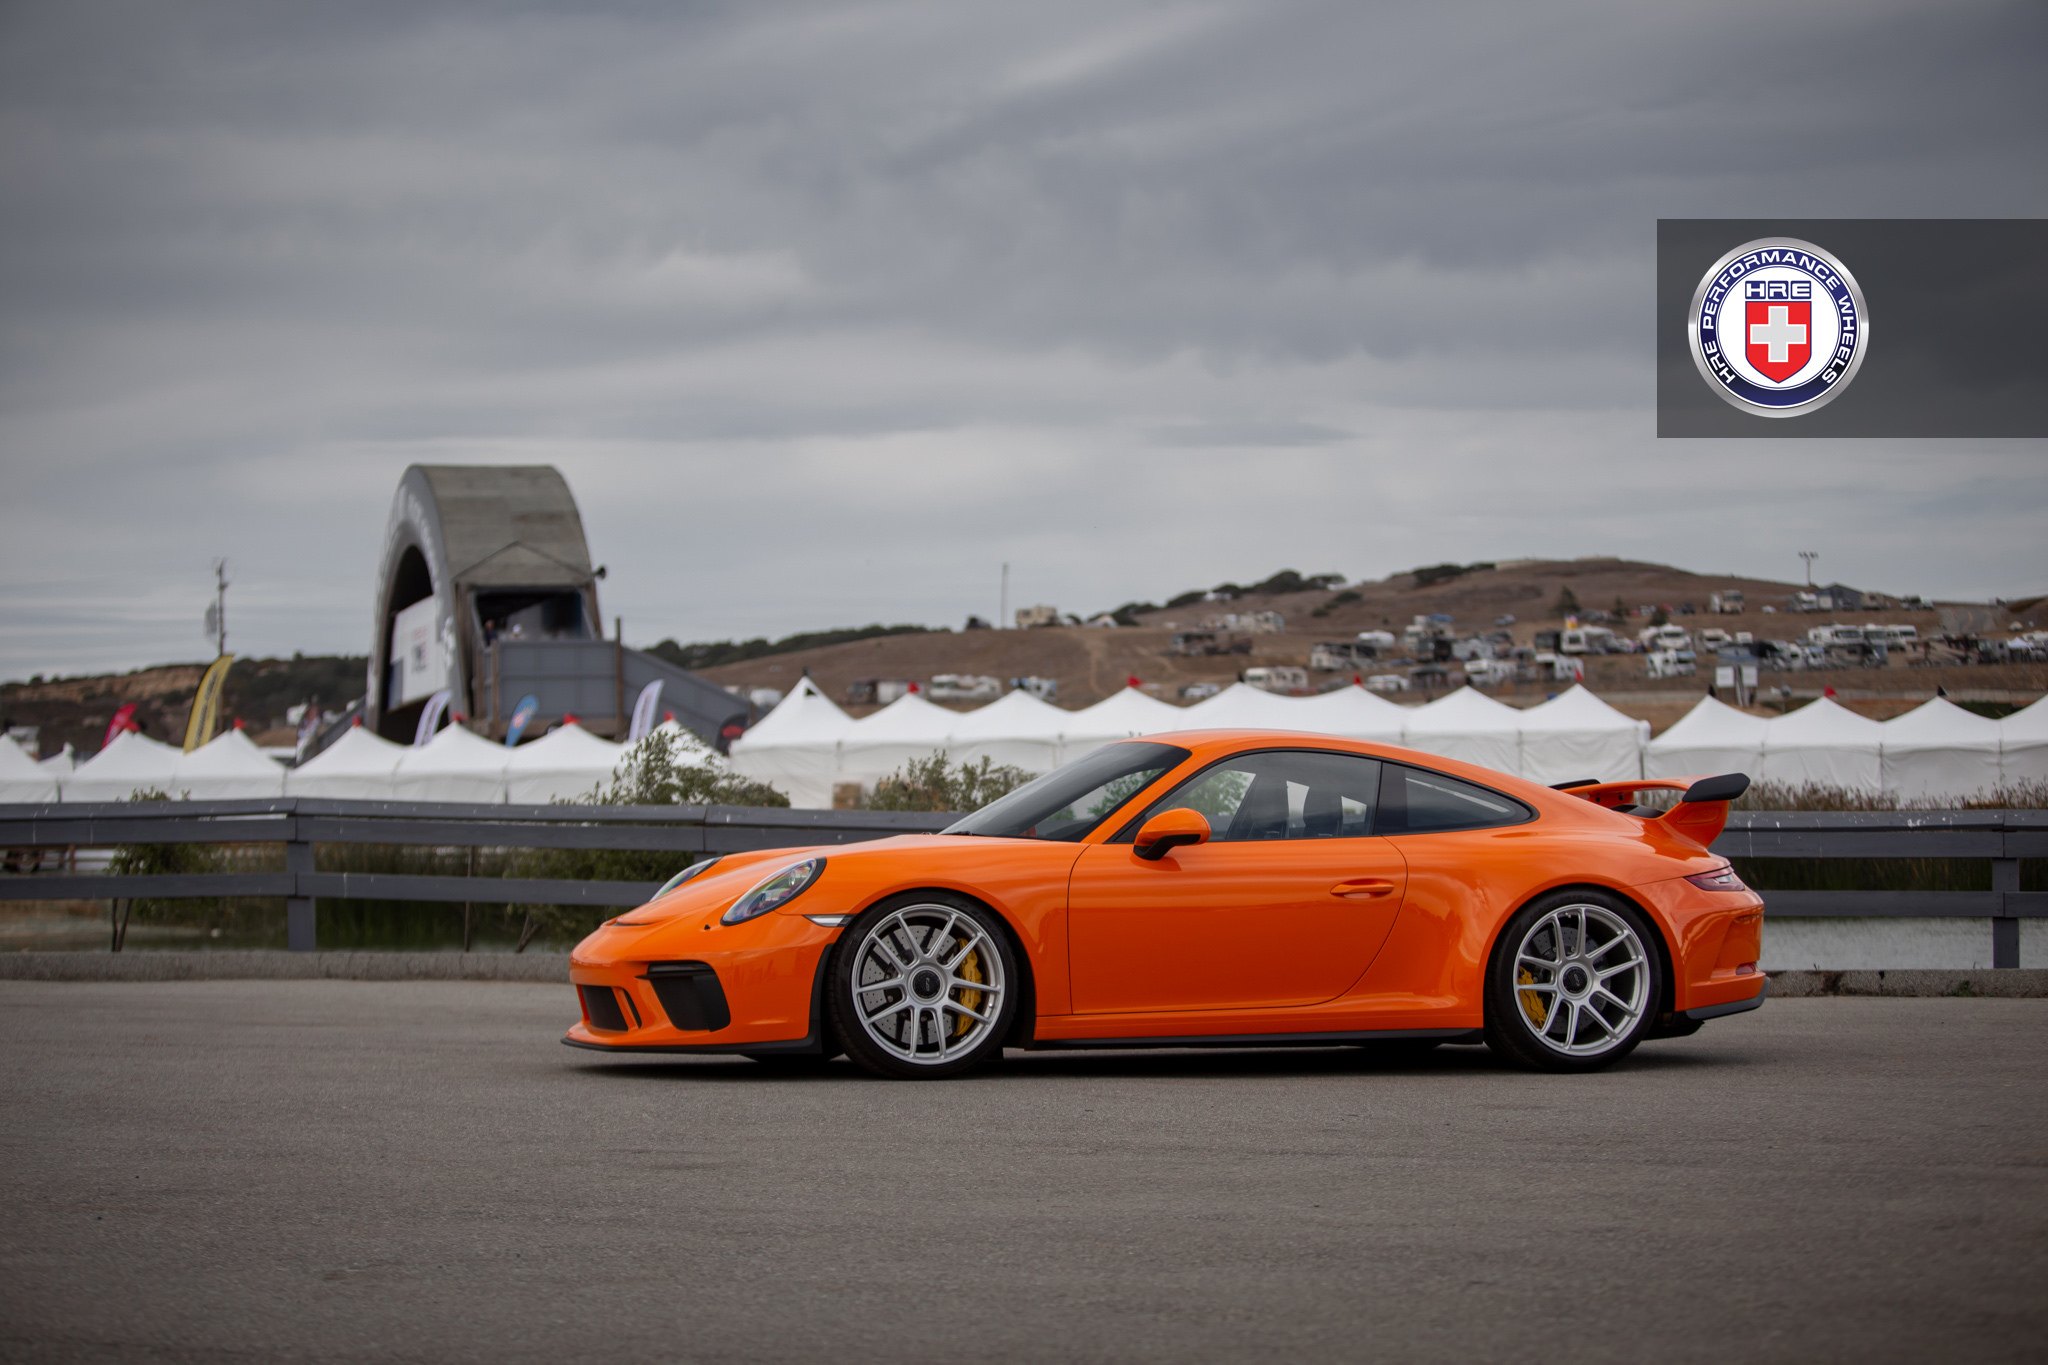 Chrome HRE Performance Rims on Orange Porsche 911 - Photo by HRE Wheels